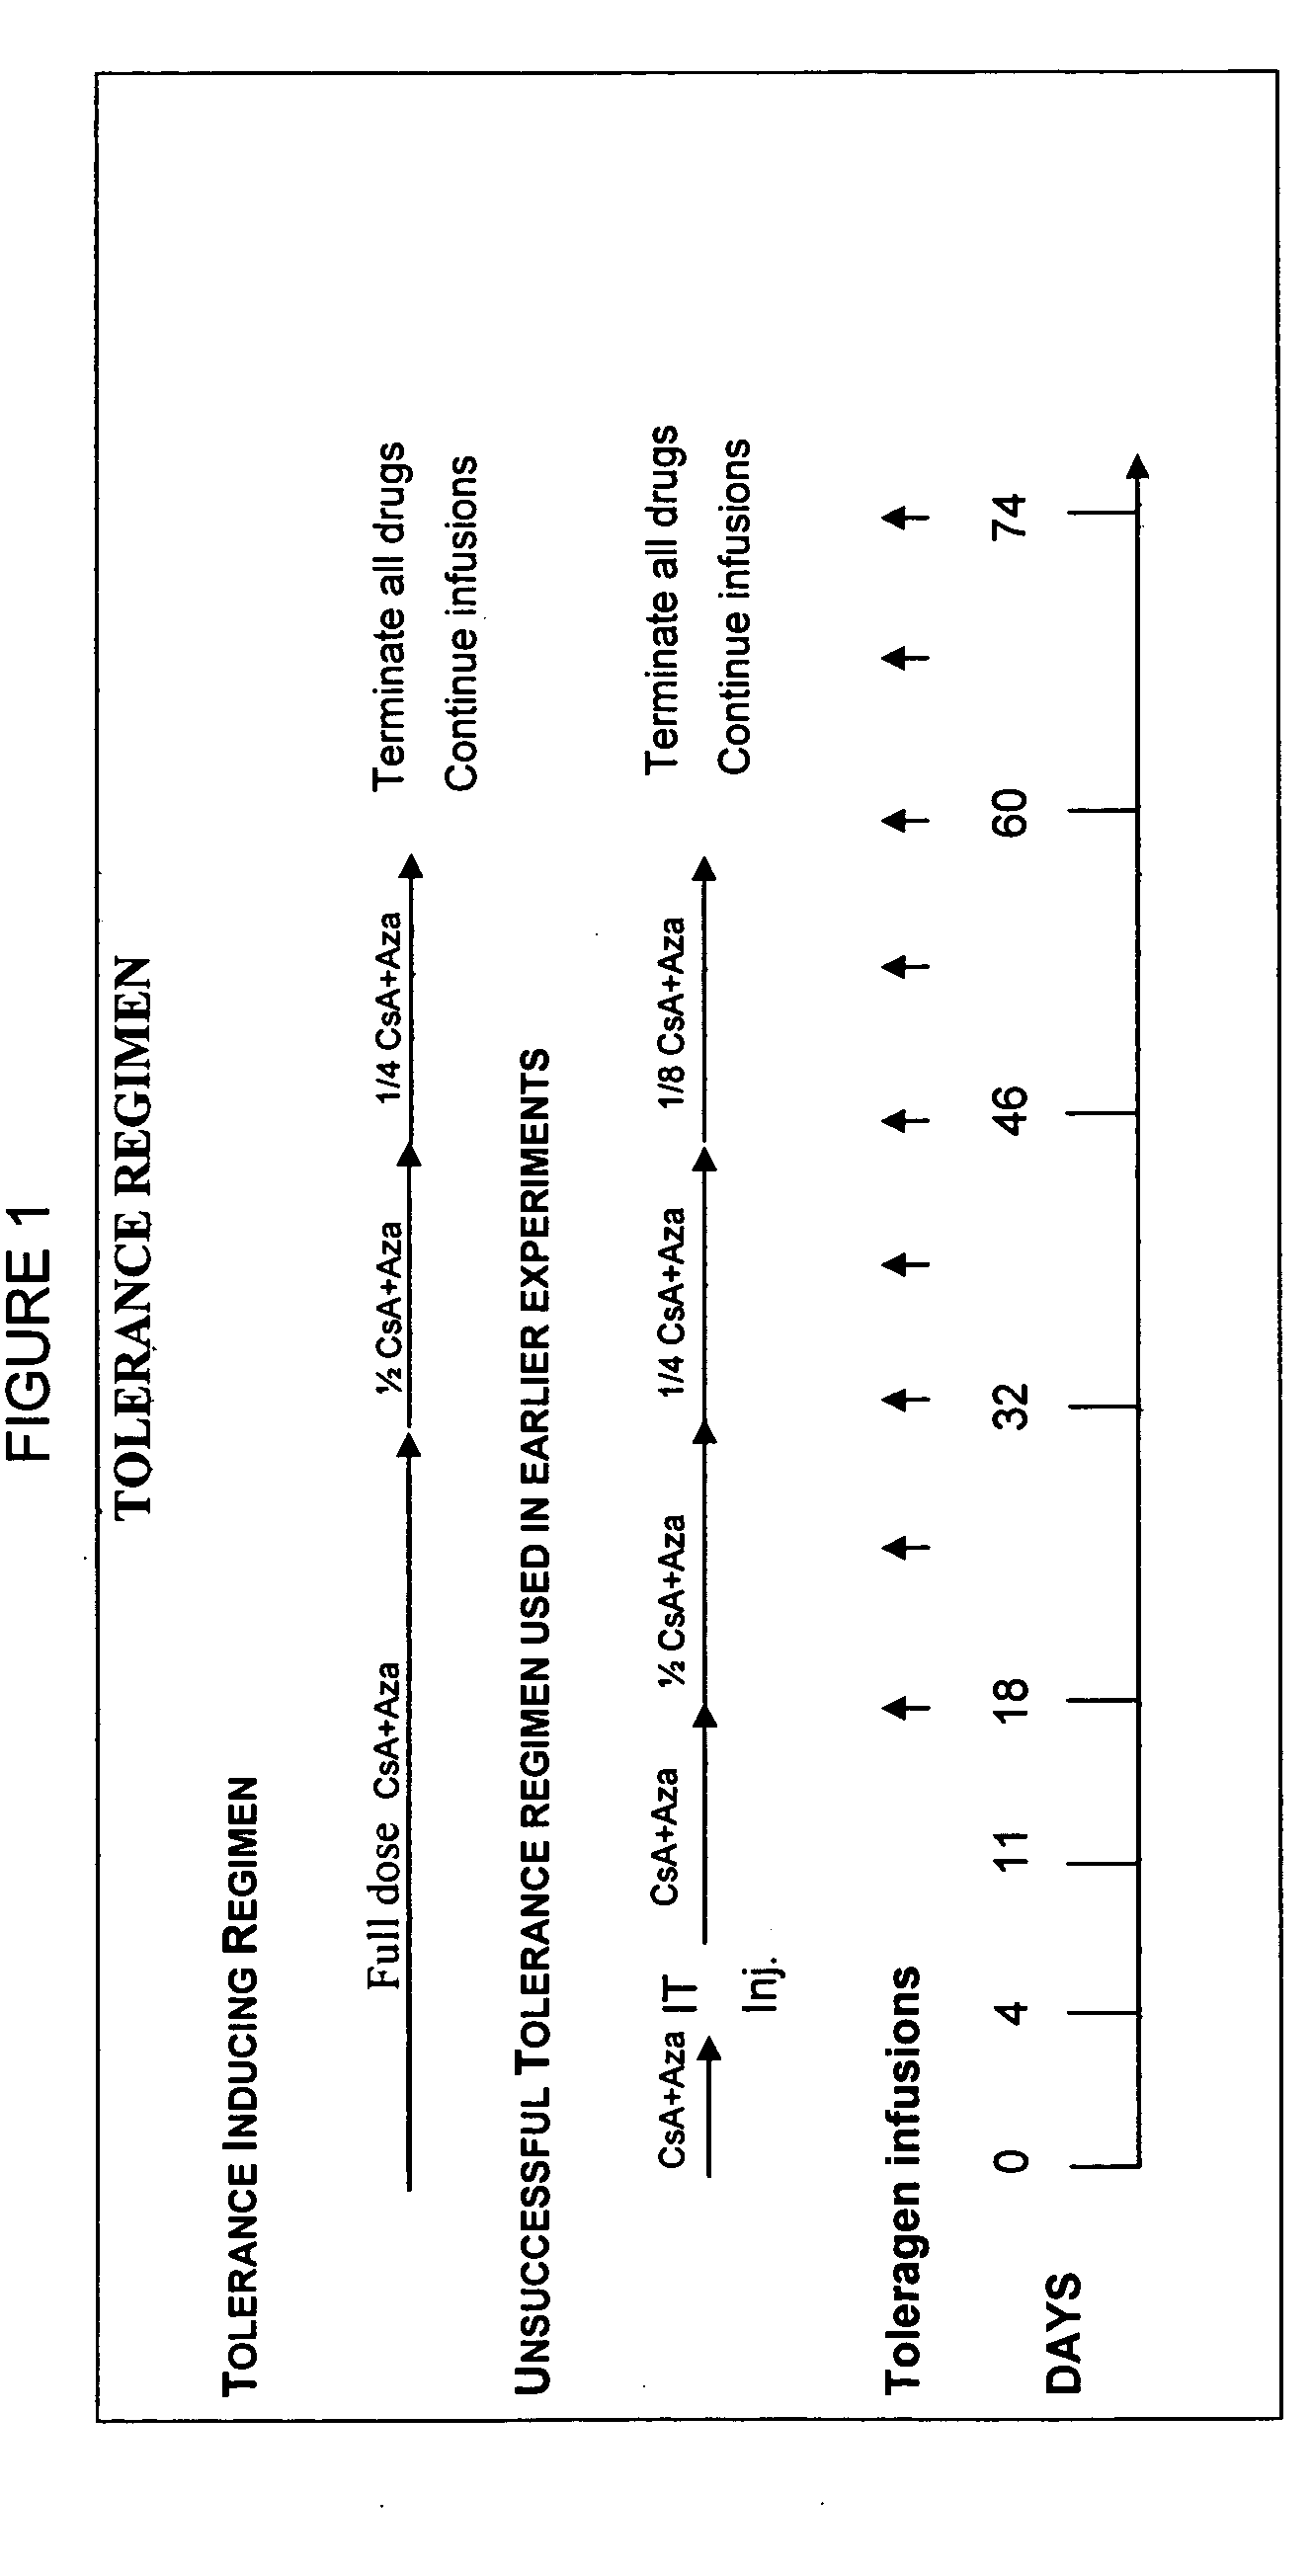 Induction of antigen specific immunologic tolerance